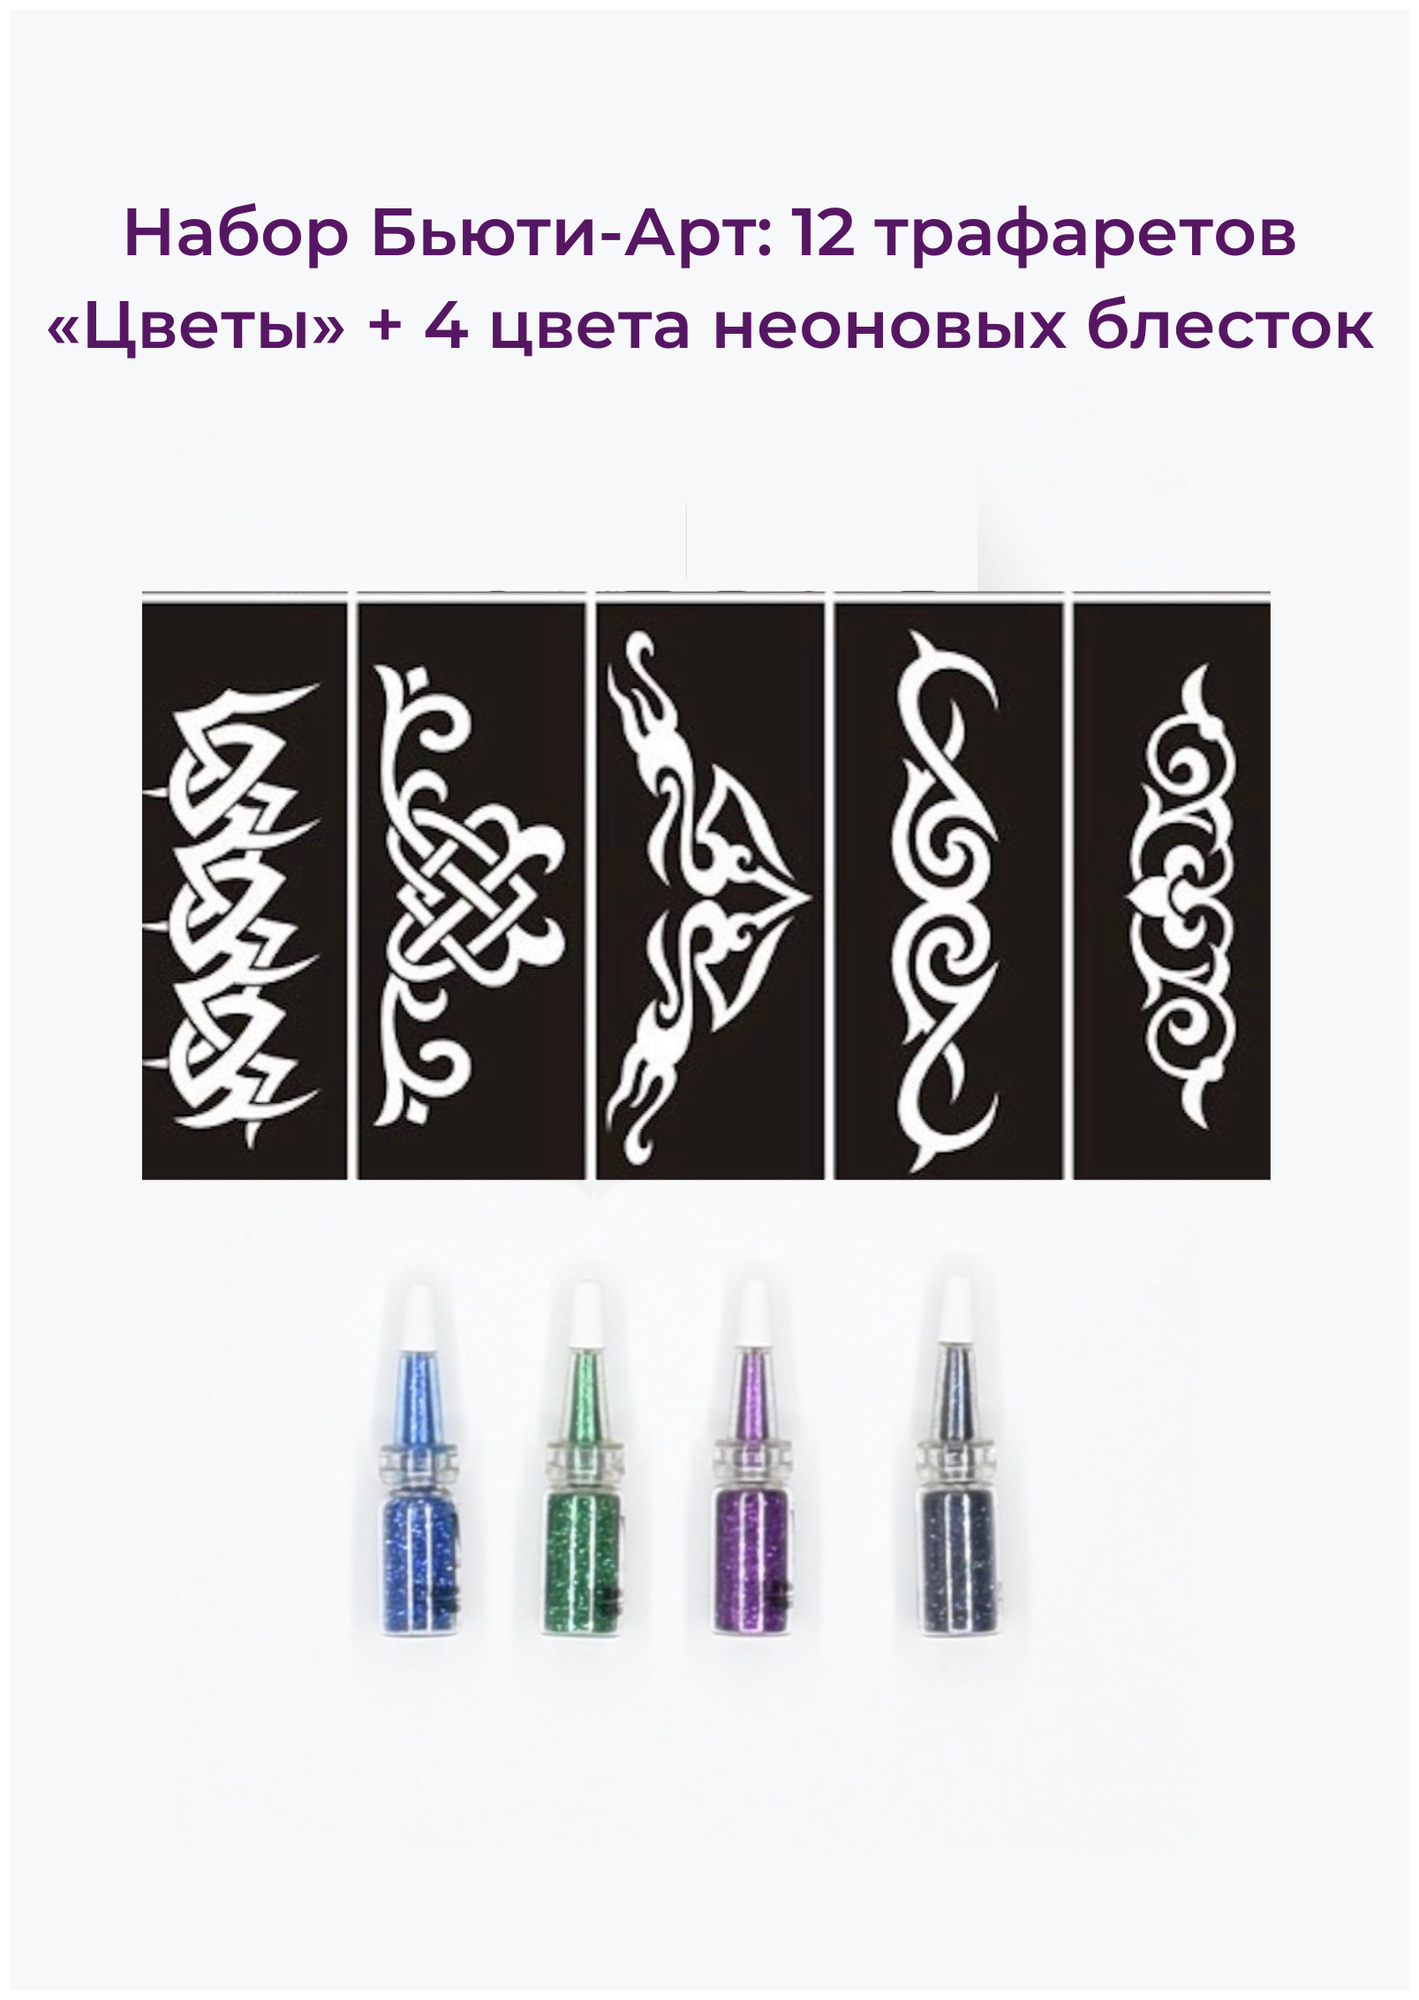 Beauty Concept Набор боди-арт: 12 тату трафаретов (цветы) + 4 цвета неоновых блесток